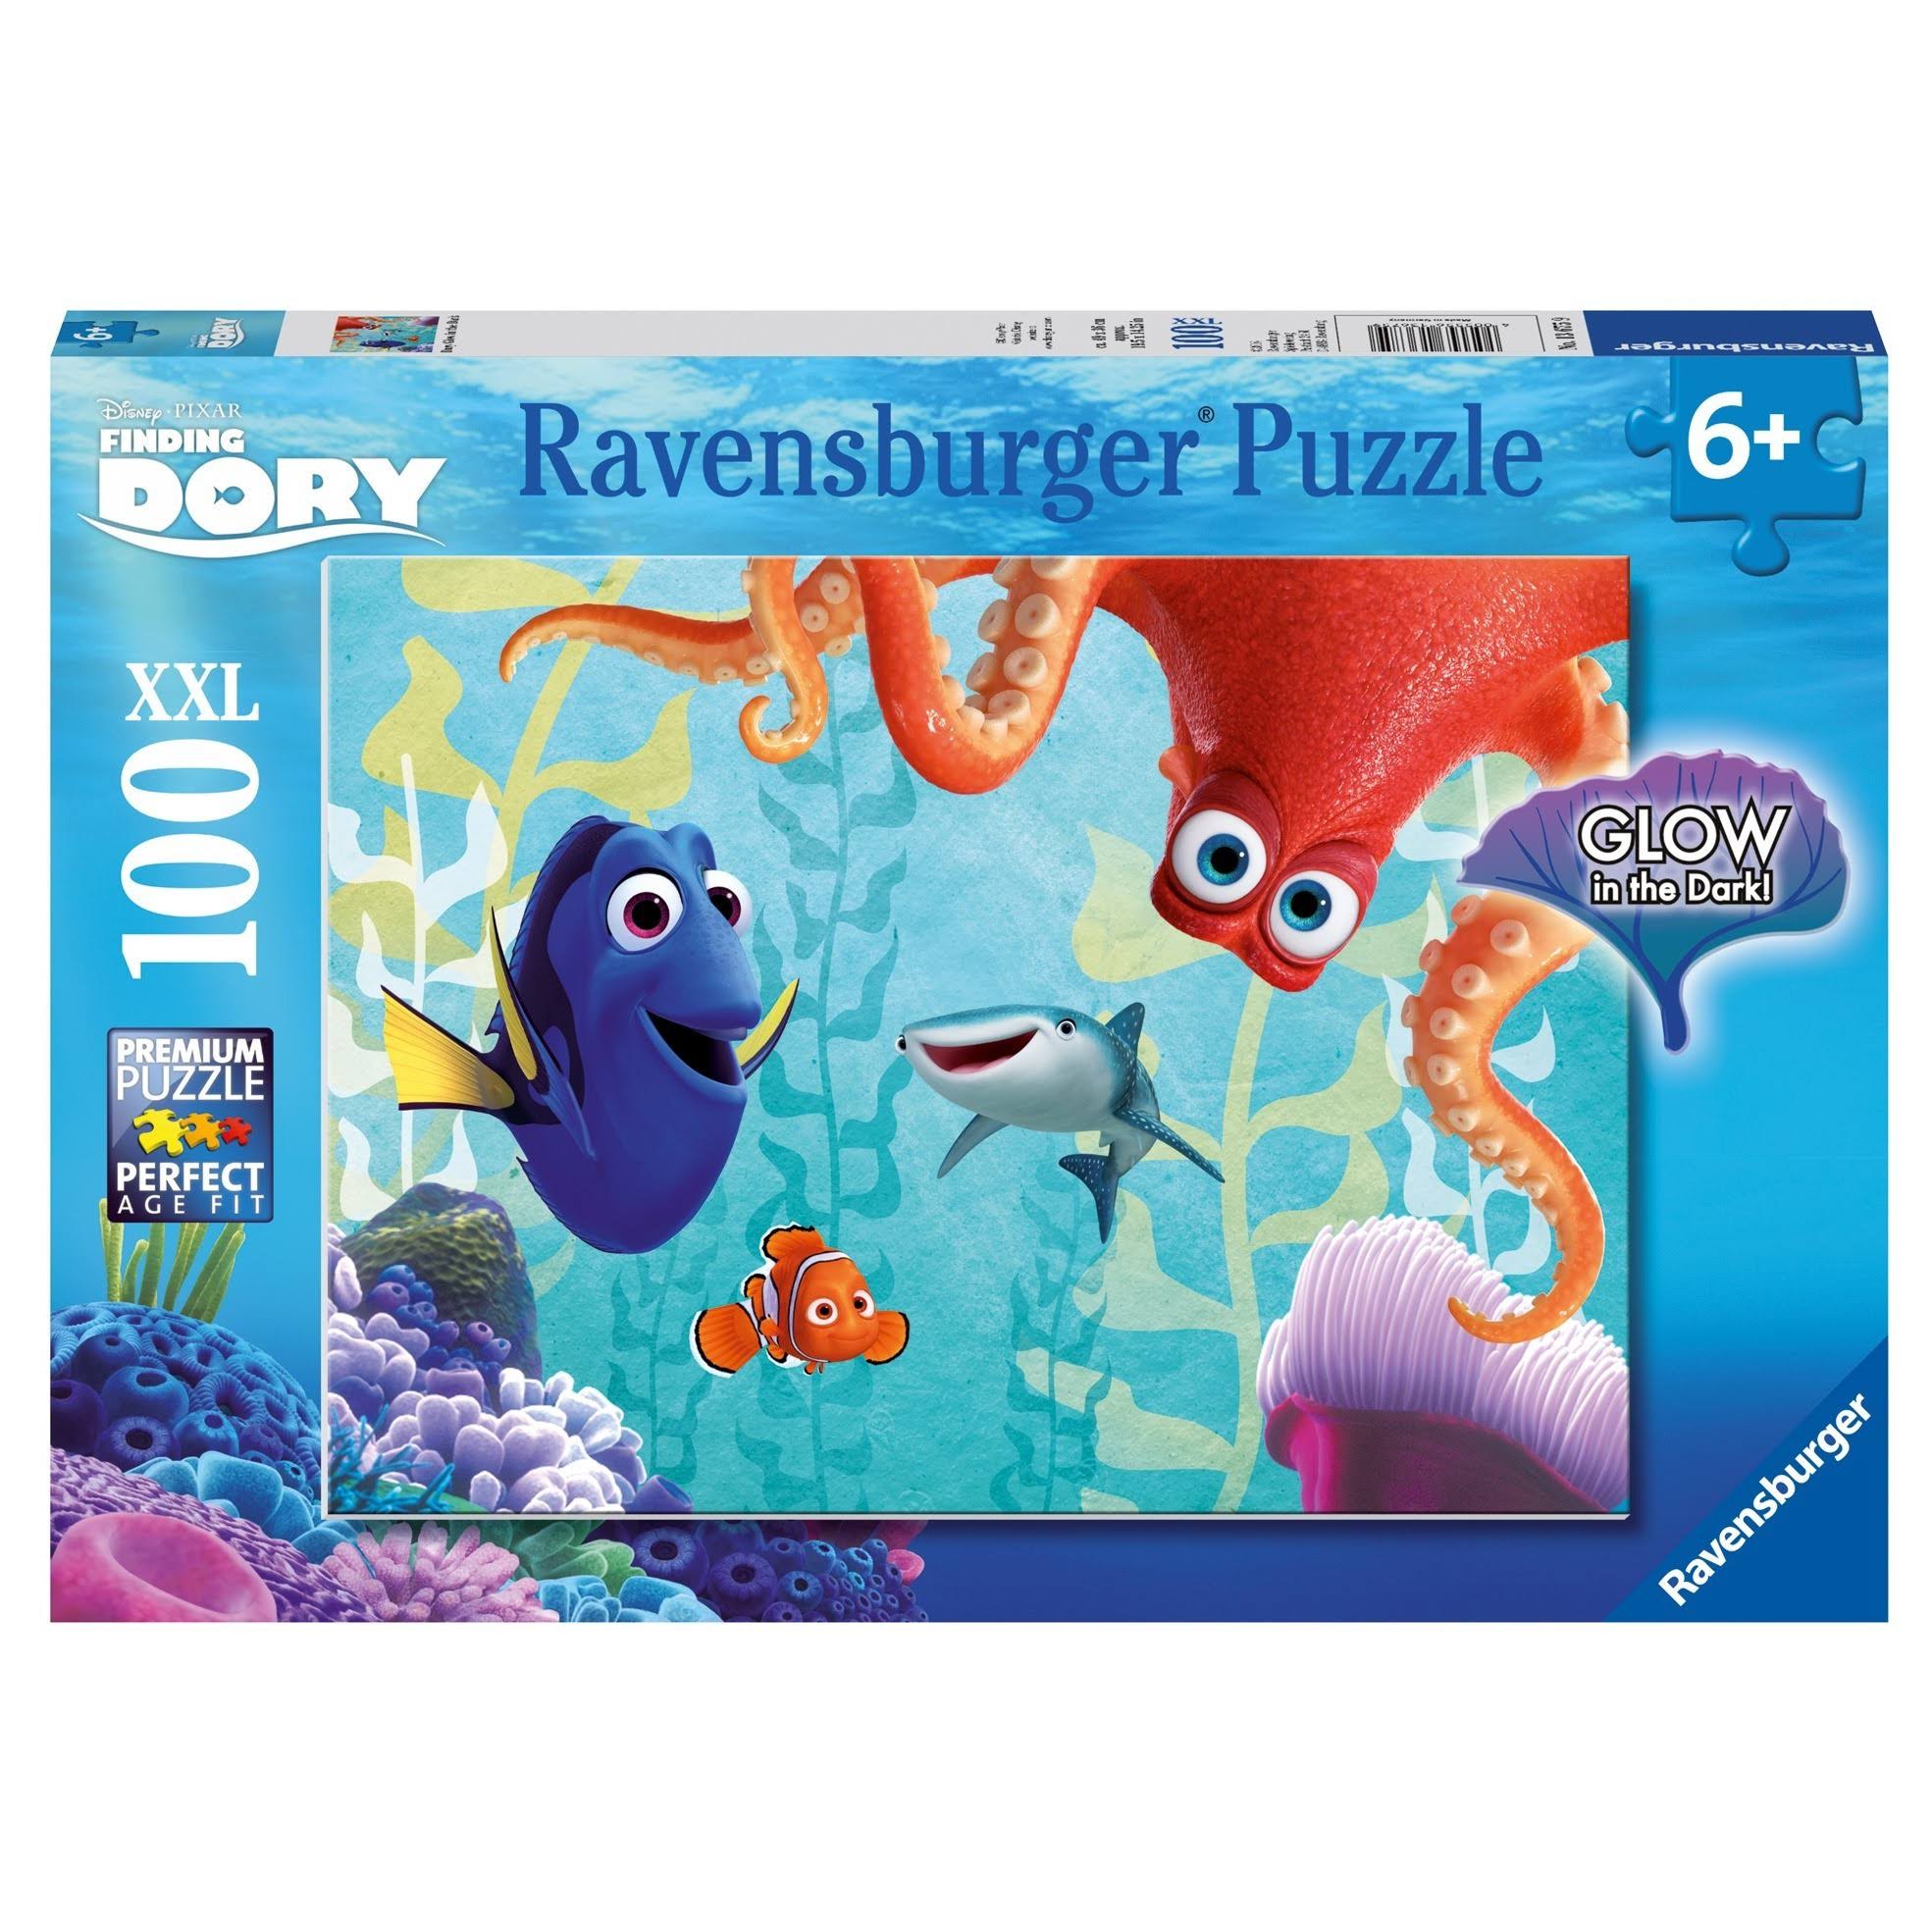 Ravensburger Disney Finding Dory Glow In The Dark Puzzle Box Set - 100pcs